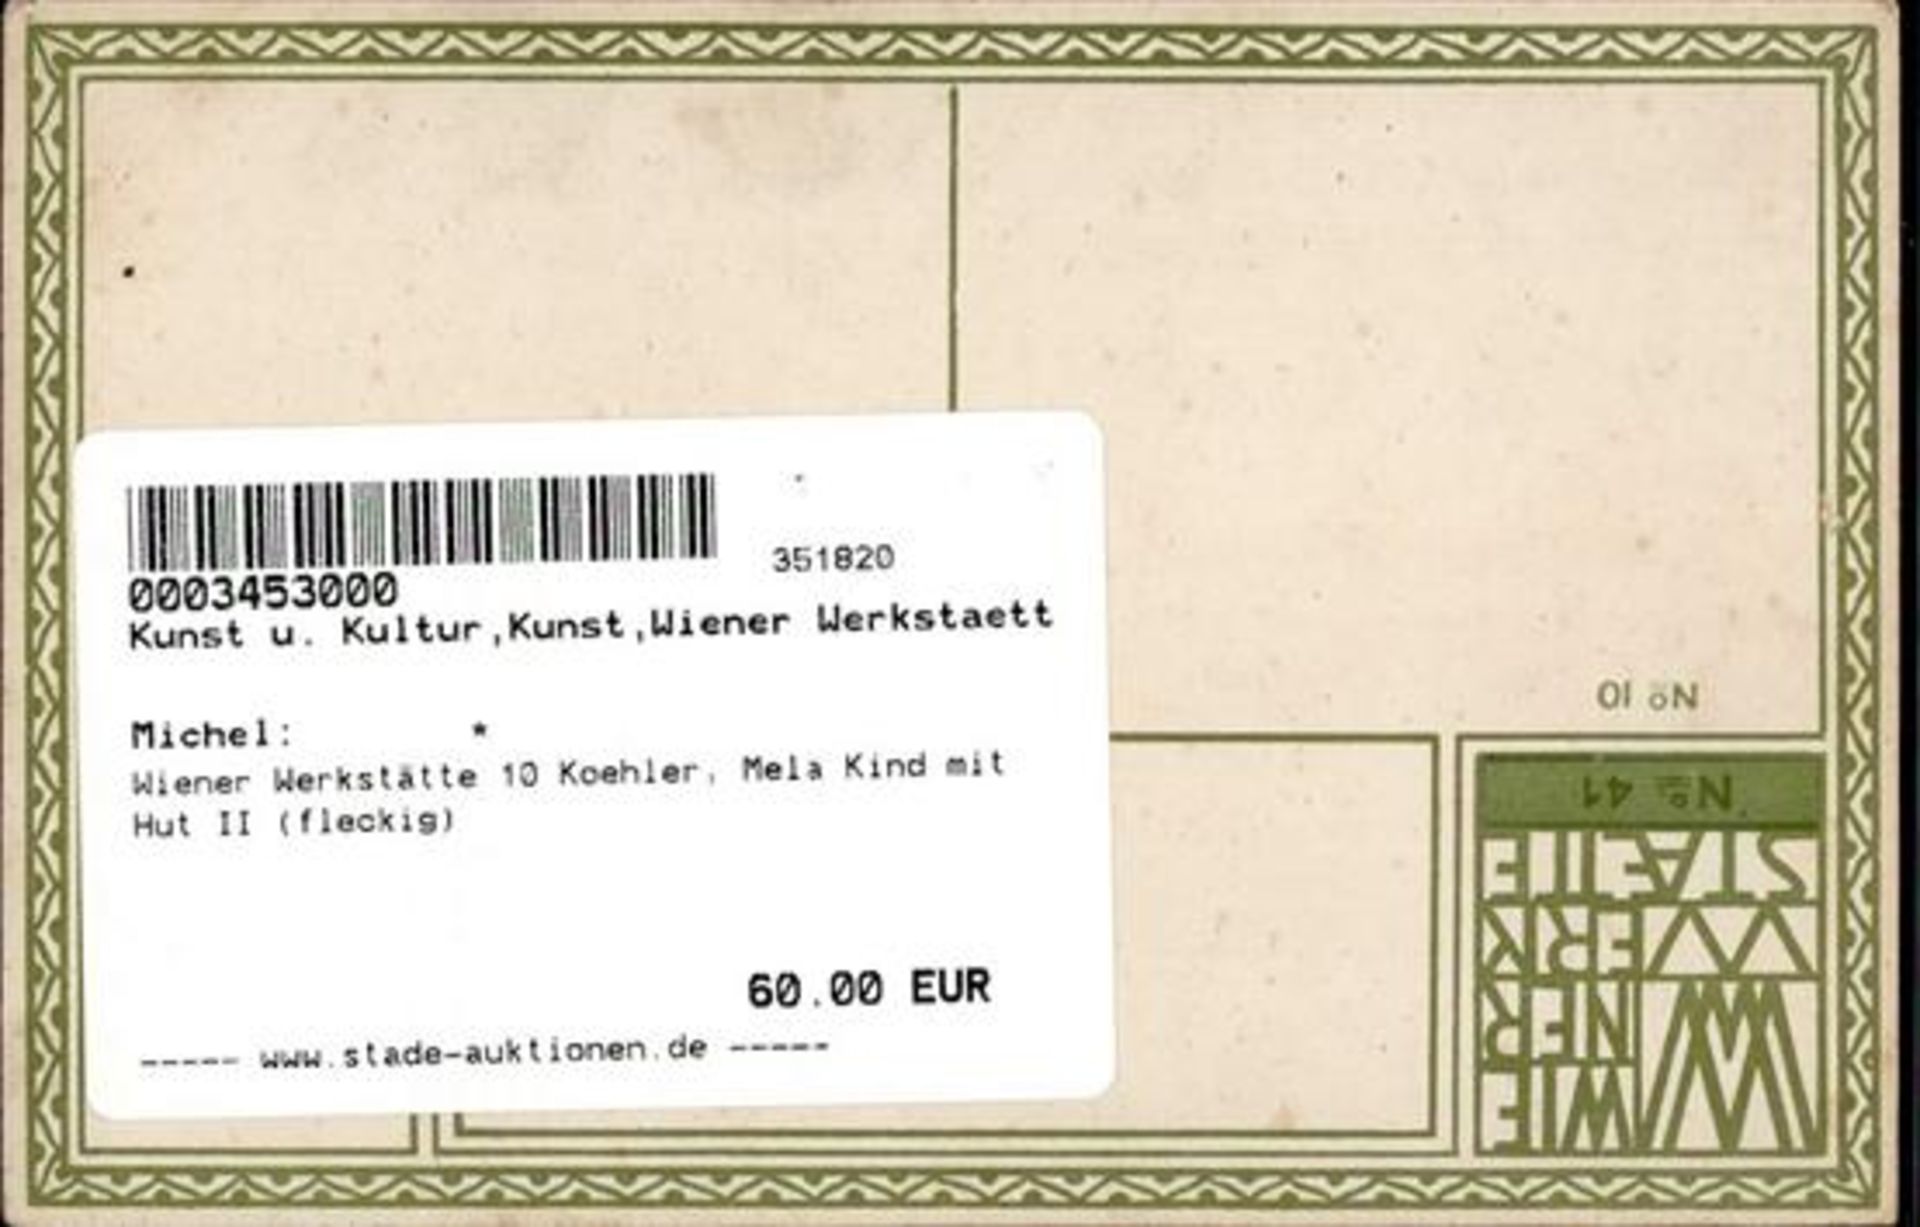 Wiener Werkstätte 10 Koehler, Mela Kind mit Hut II (fleckig) - Image 2 of 2